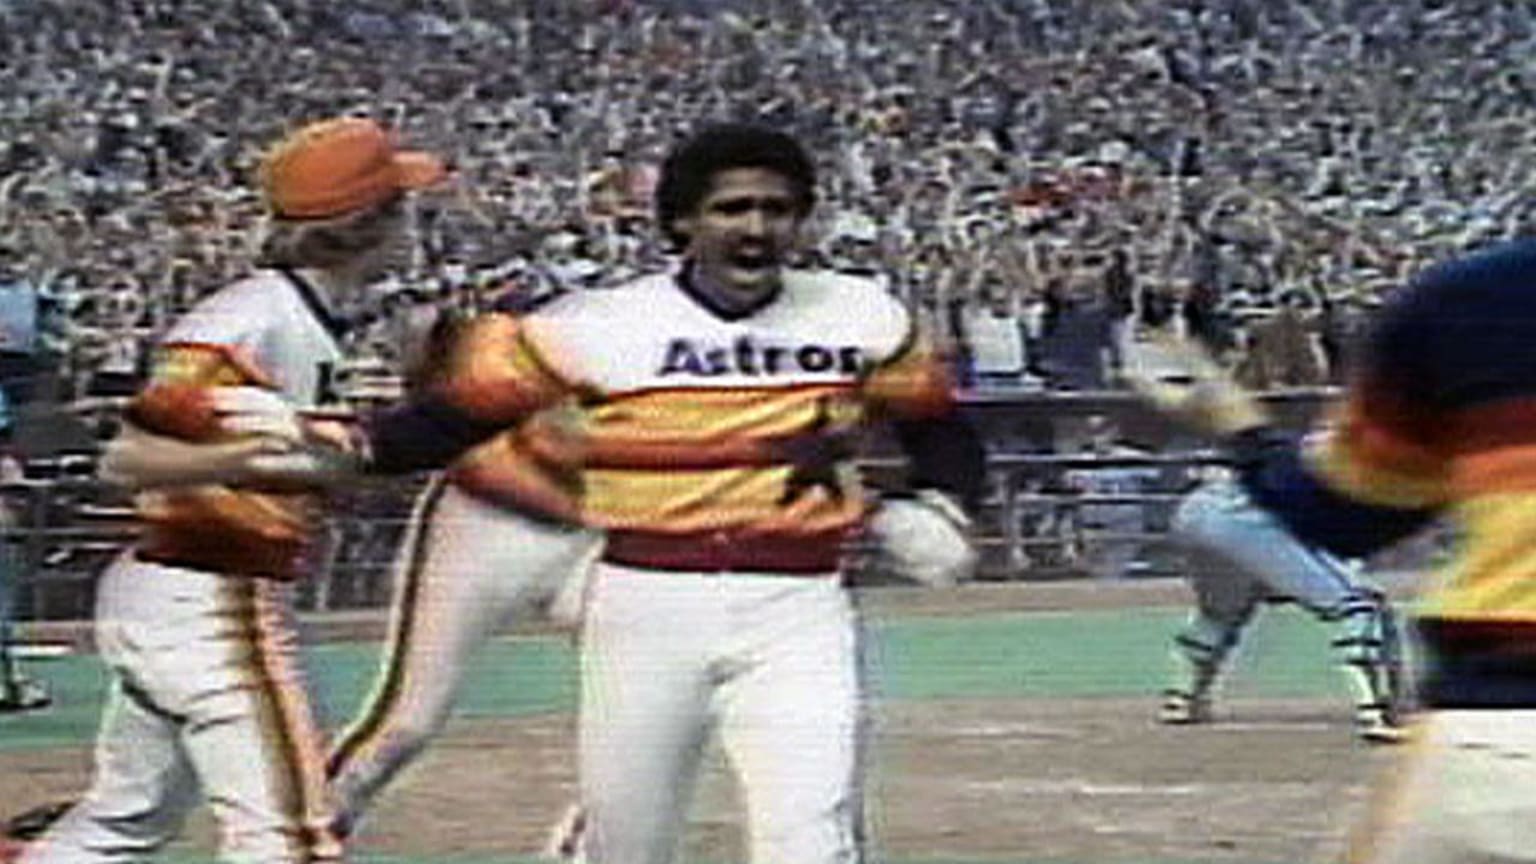 Astros walk off in 11, 10/10/1980